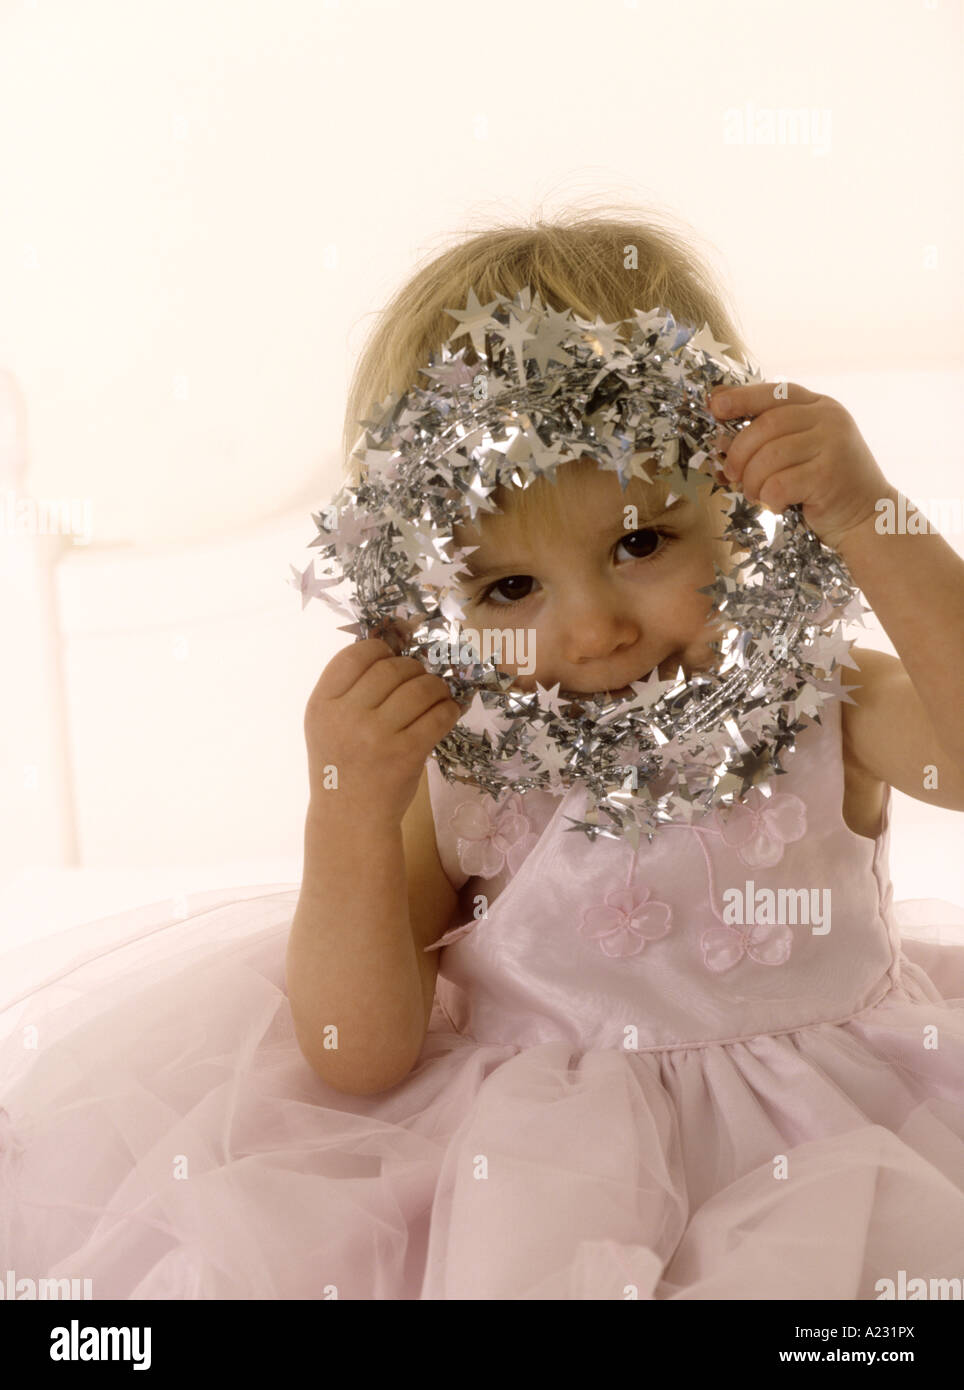 Toddler wearing a pink party dress peeking through a tinsel halo Stock Photo